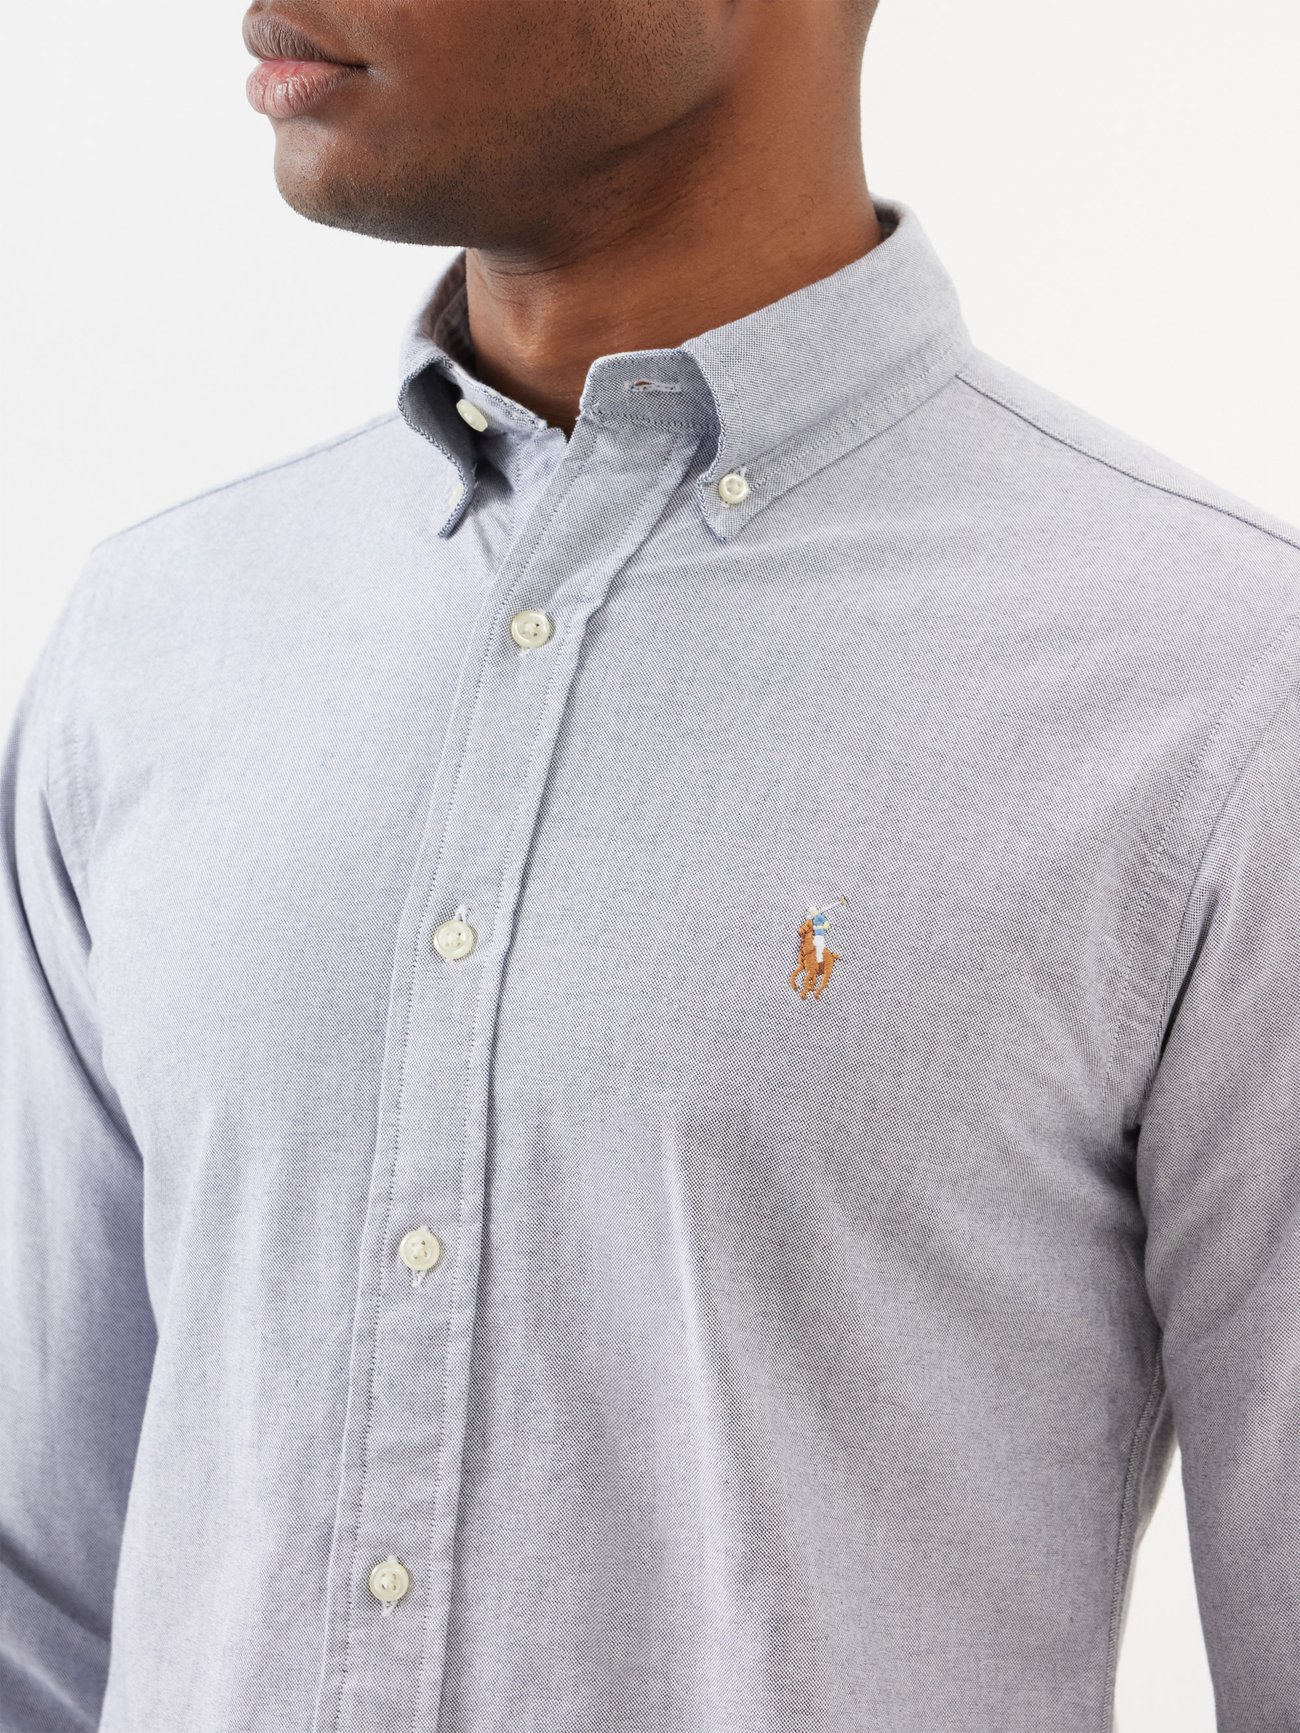 Polo Oxford shirt Comfort fit, Polo Ralph Lauren, Shop Men's Solid Shirts  Online